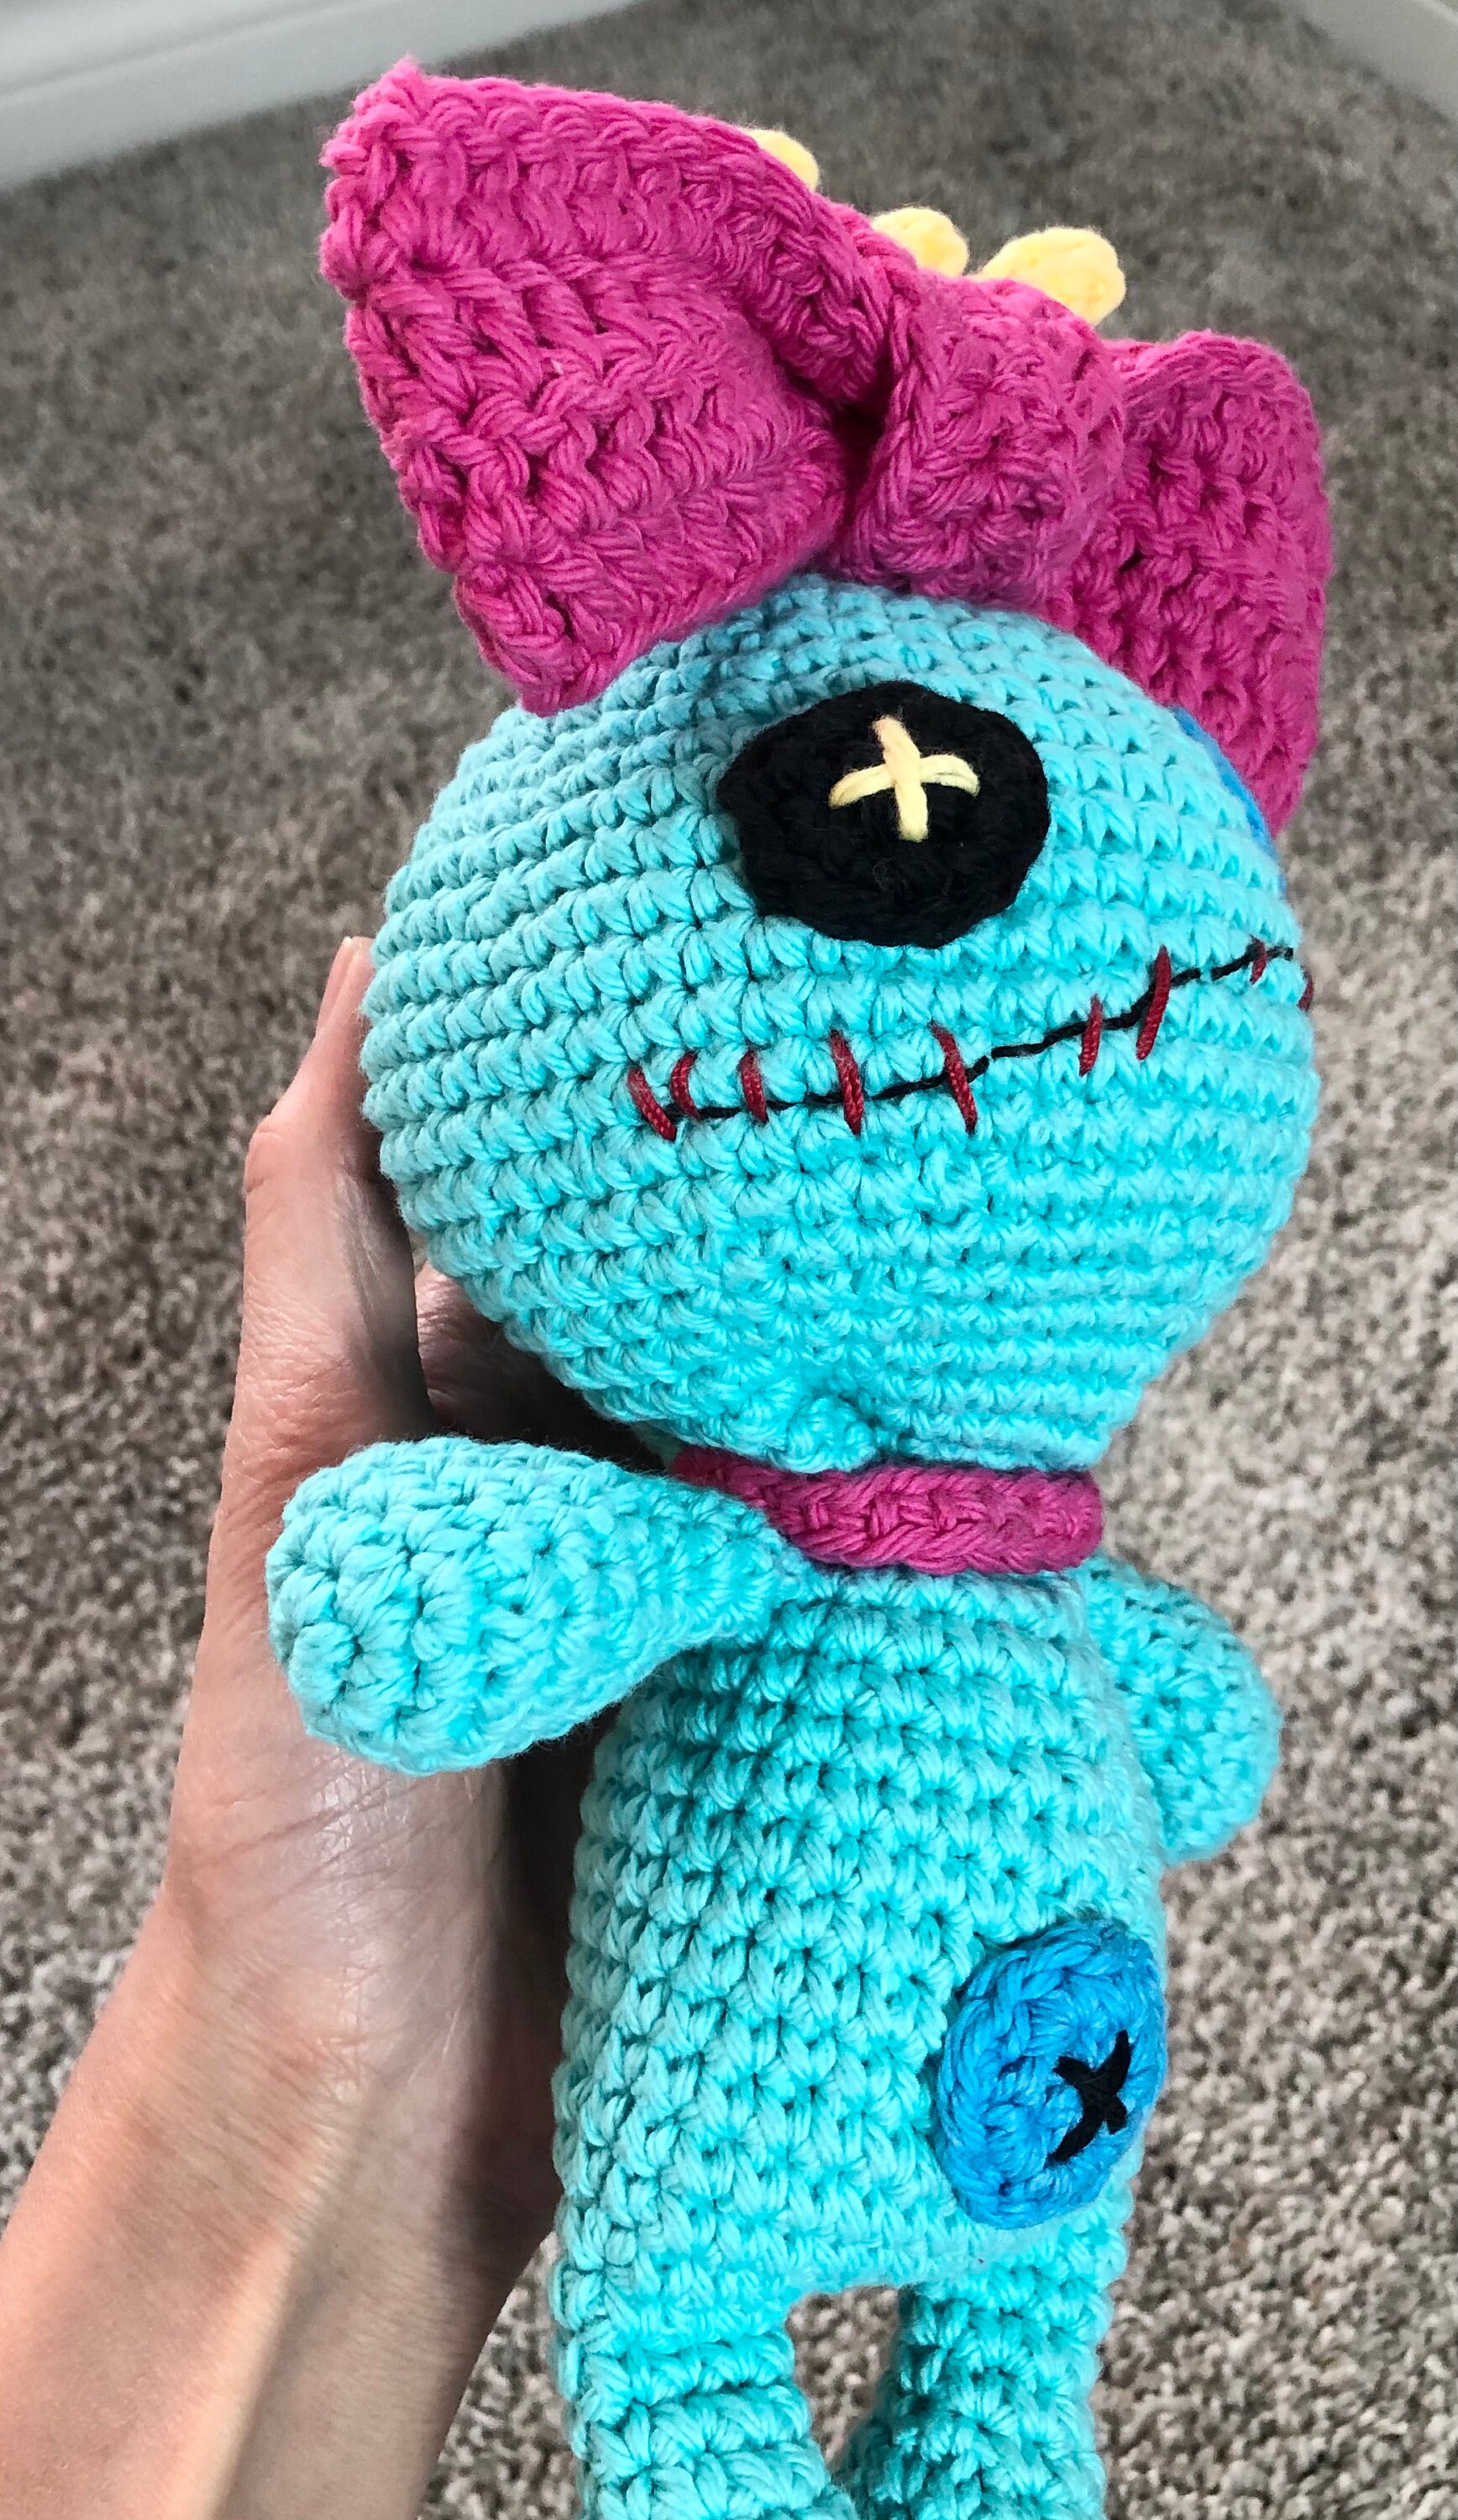 Disney Lilo and Stitch Crochet Craft Kit - Make Stitch and Scrump